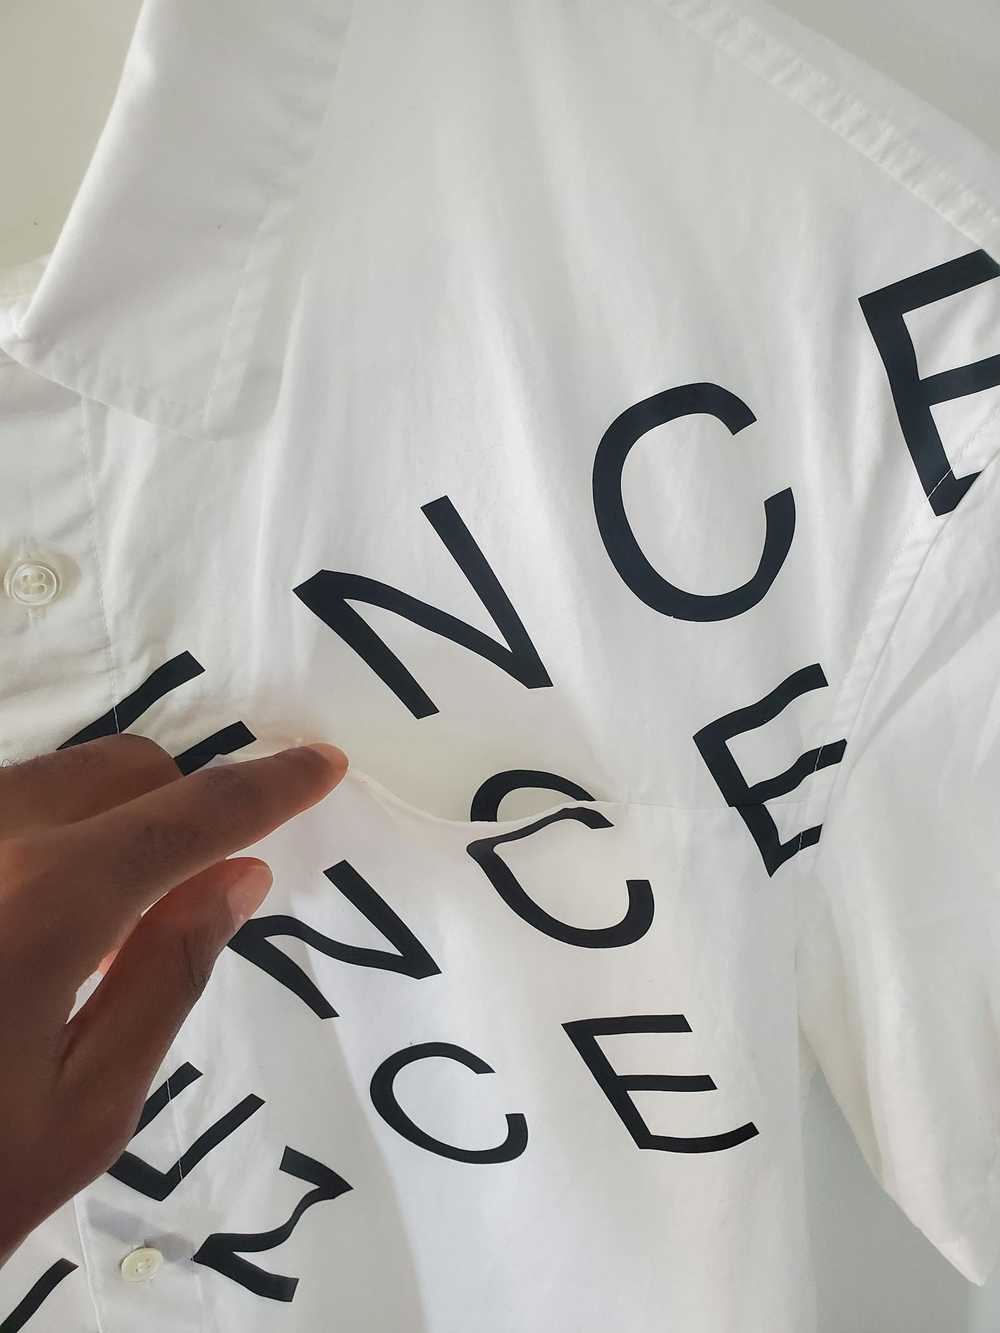 John Undercover "PSYLENCE" White Cotton Shirt - image 3